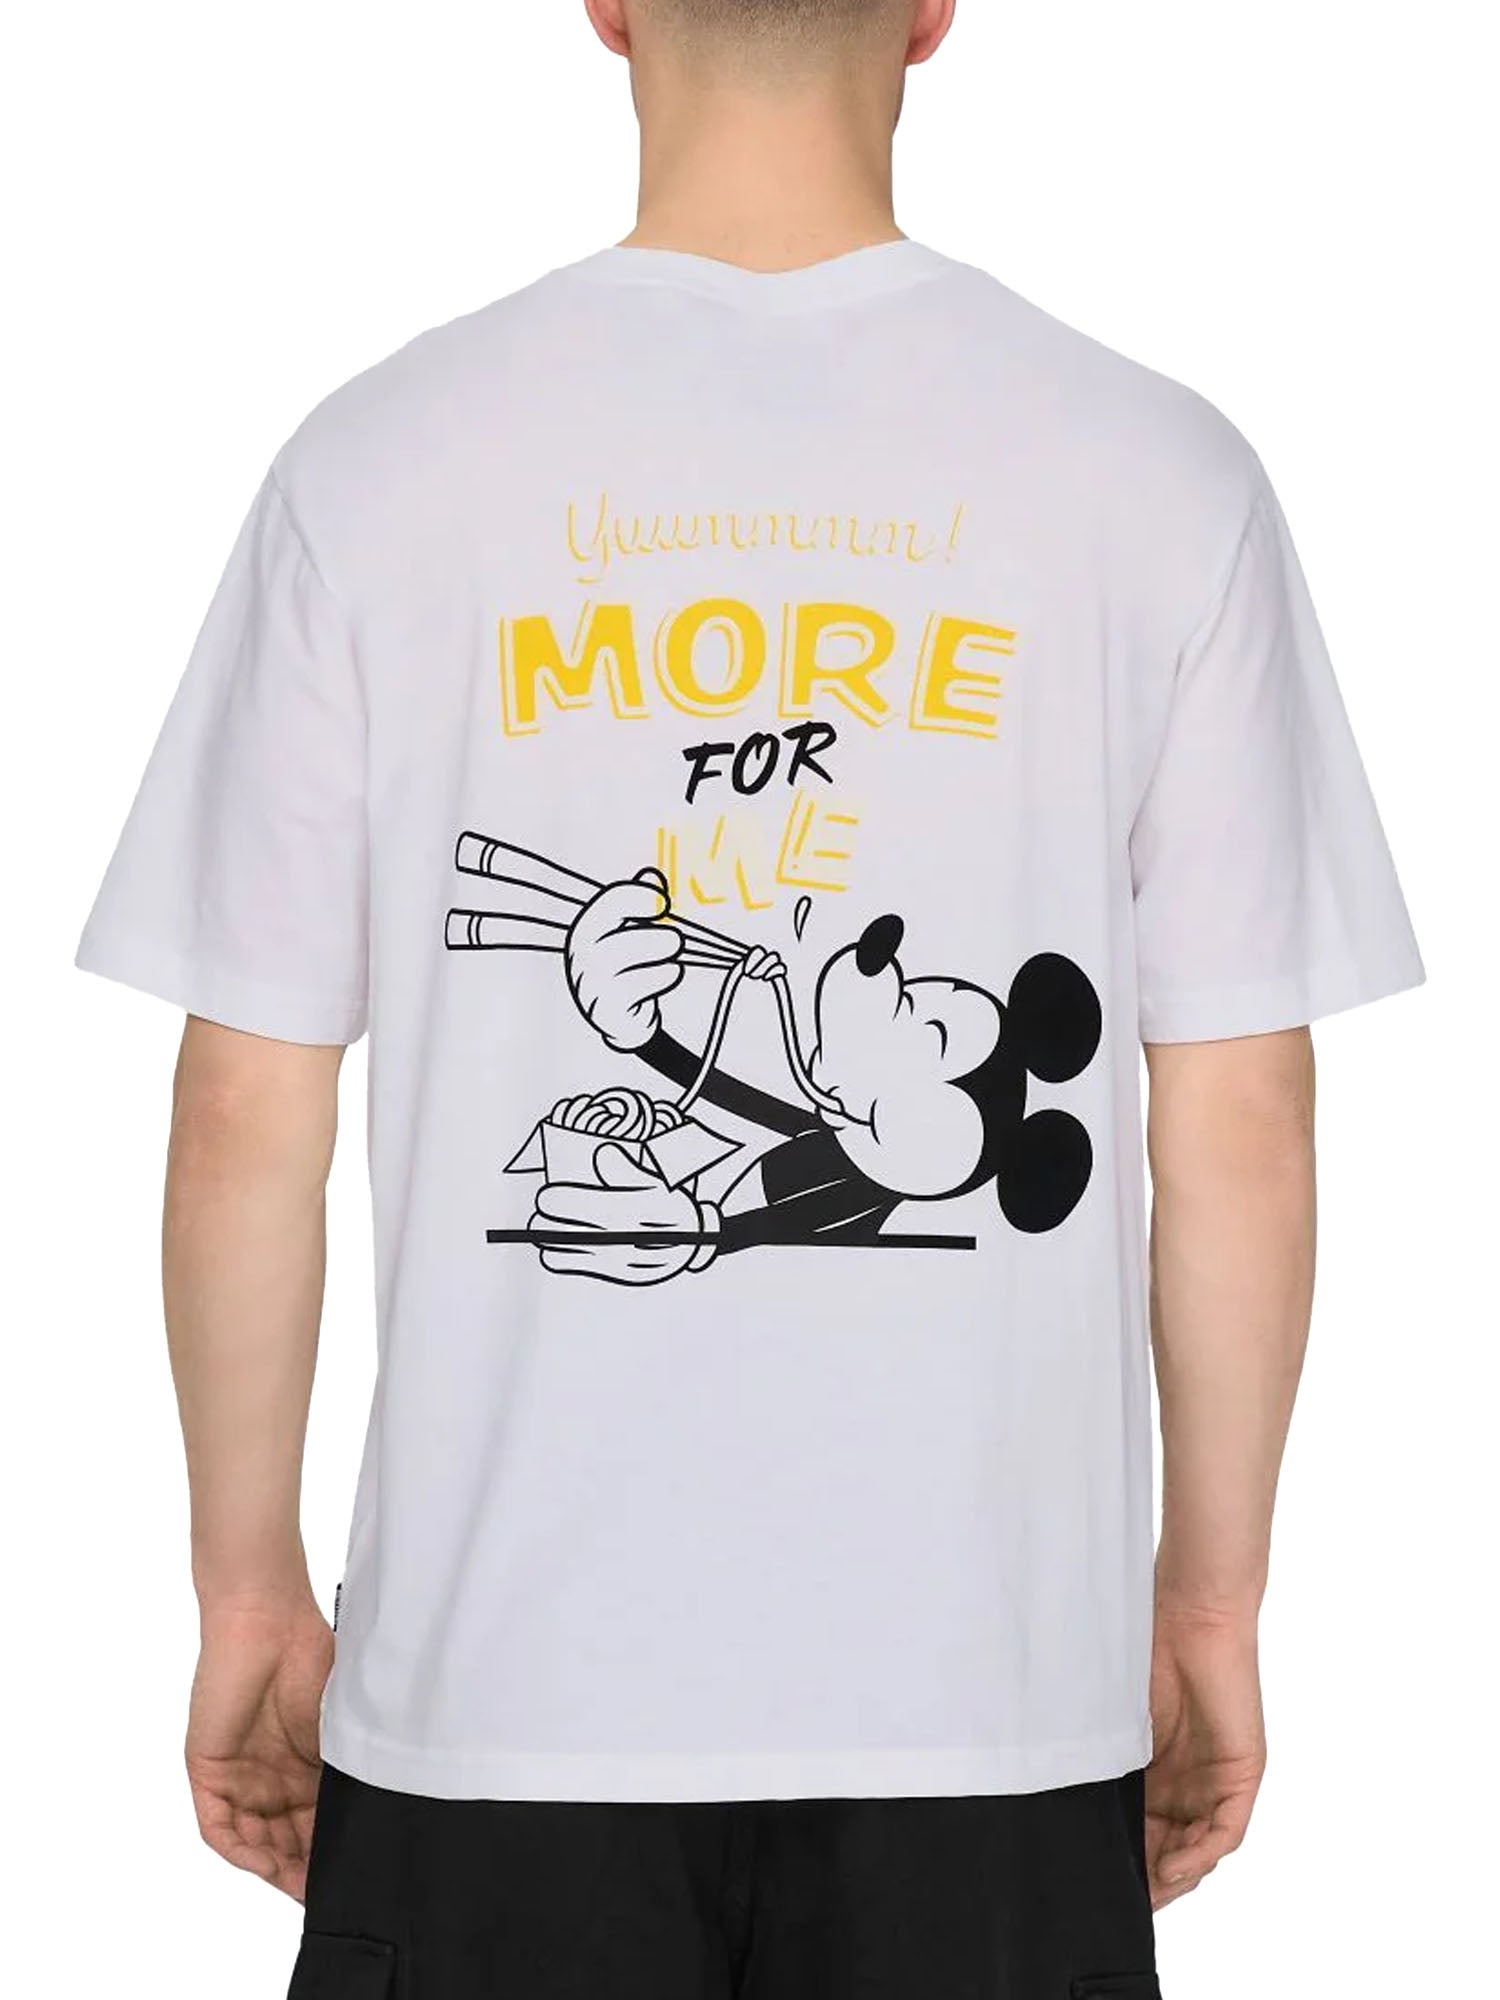 T-Shirt Disney Mickey Mouse